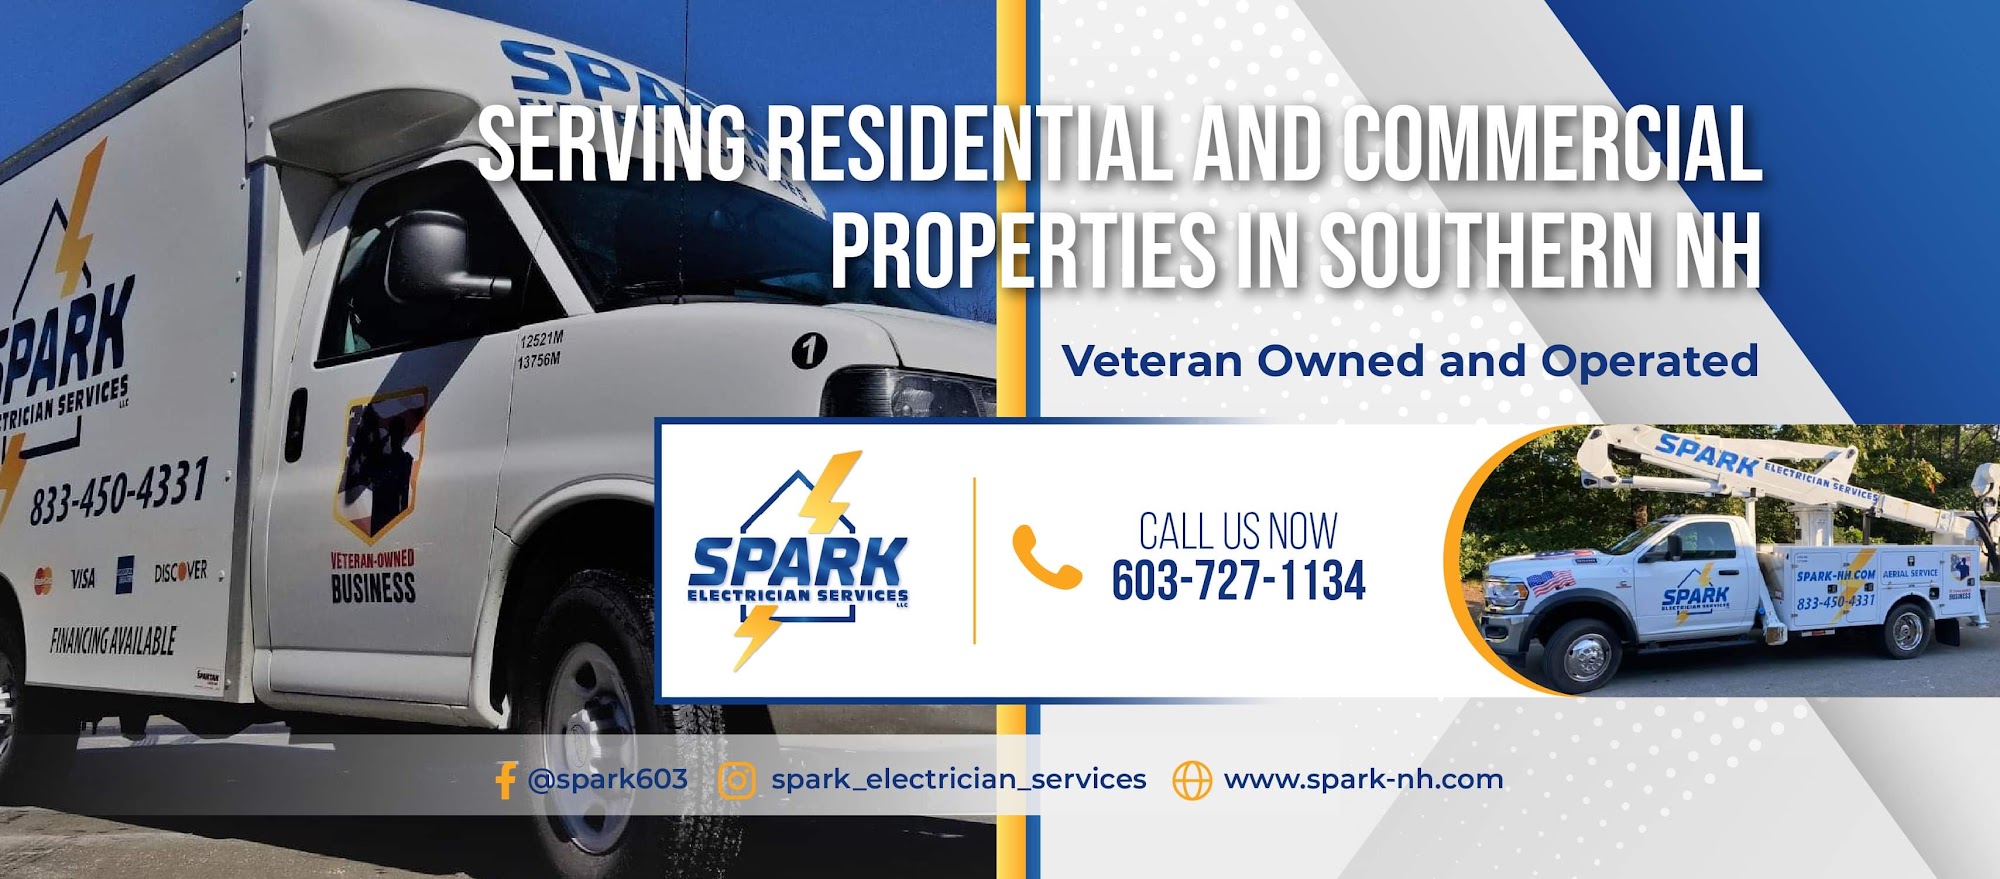 Spark Electrician Services LLC